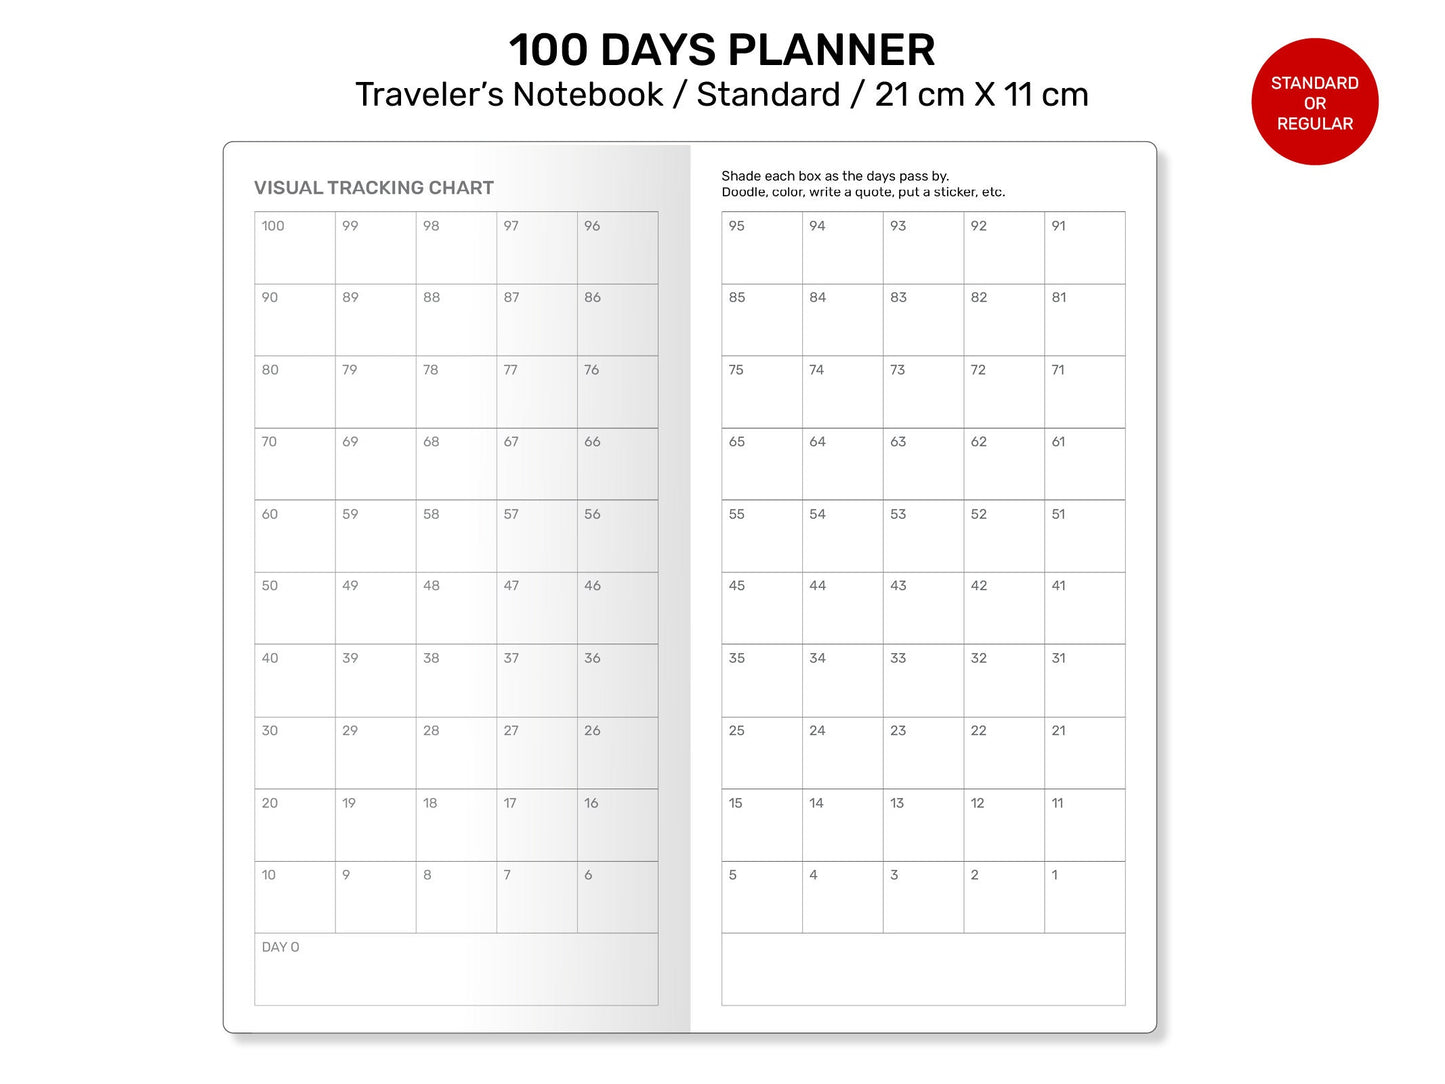 100 DAYS PLANNER Printable Traveler's Notebook Insert Standard Size